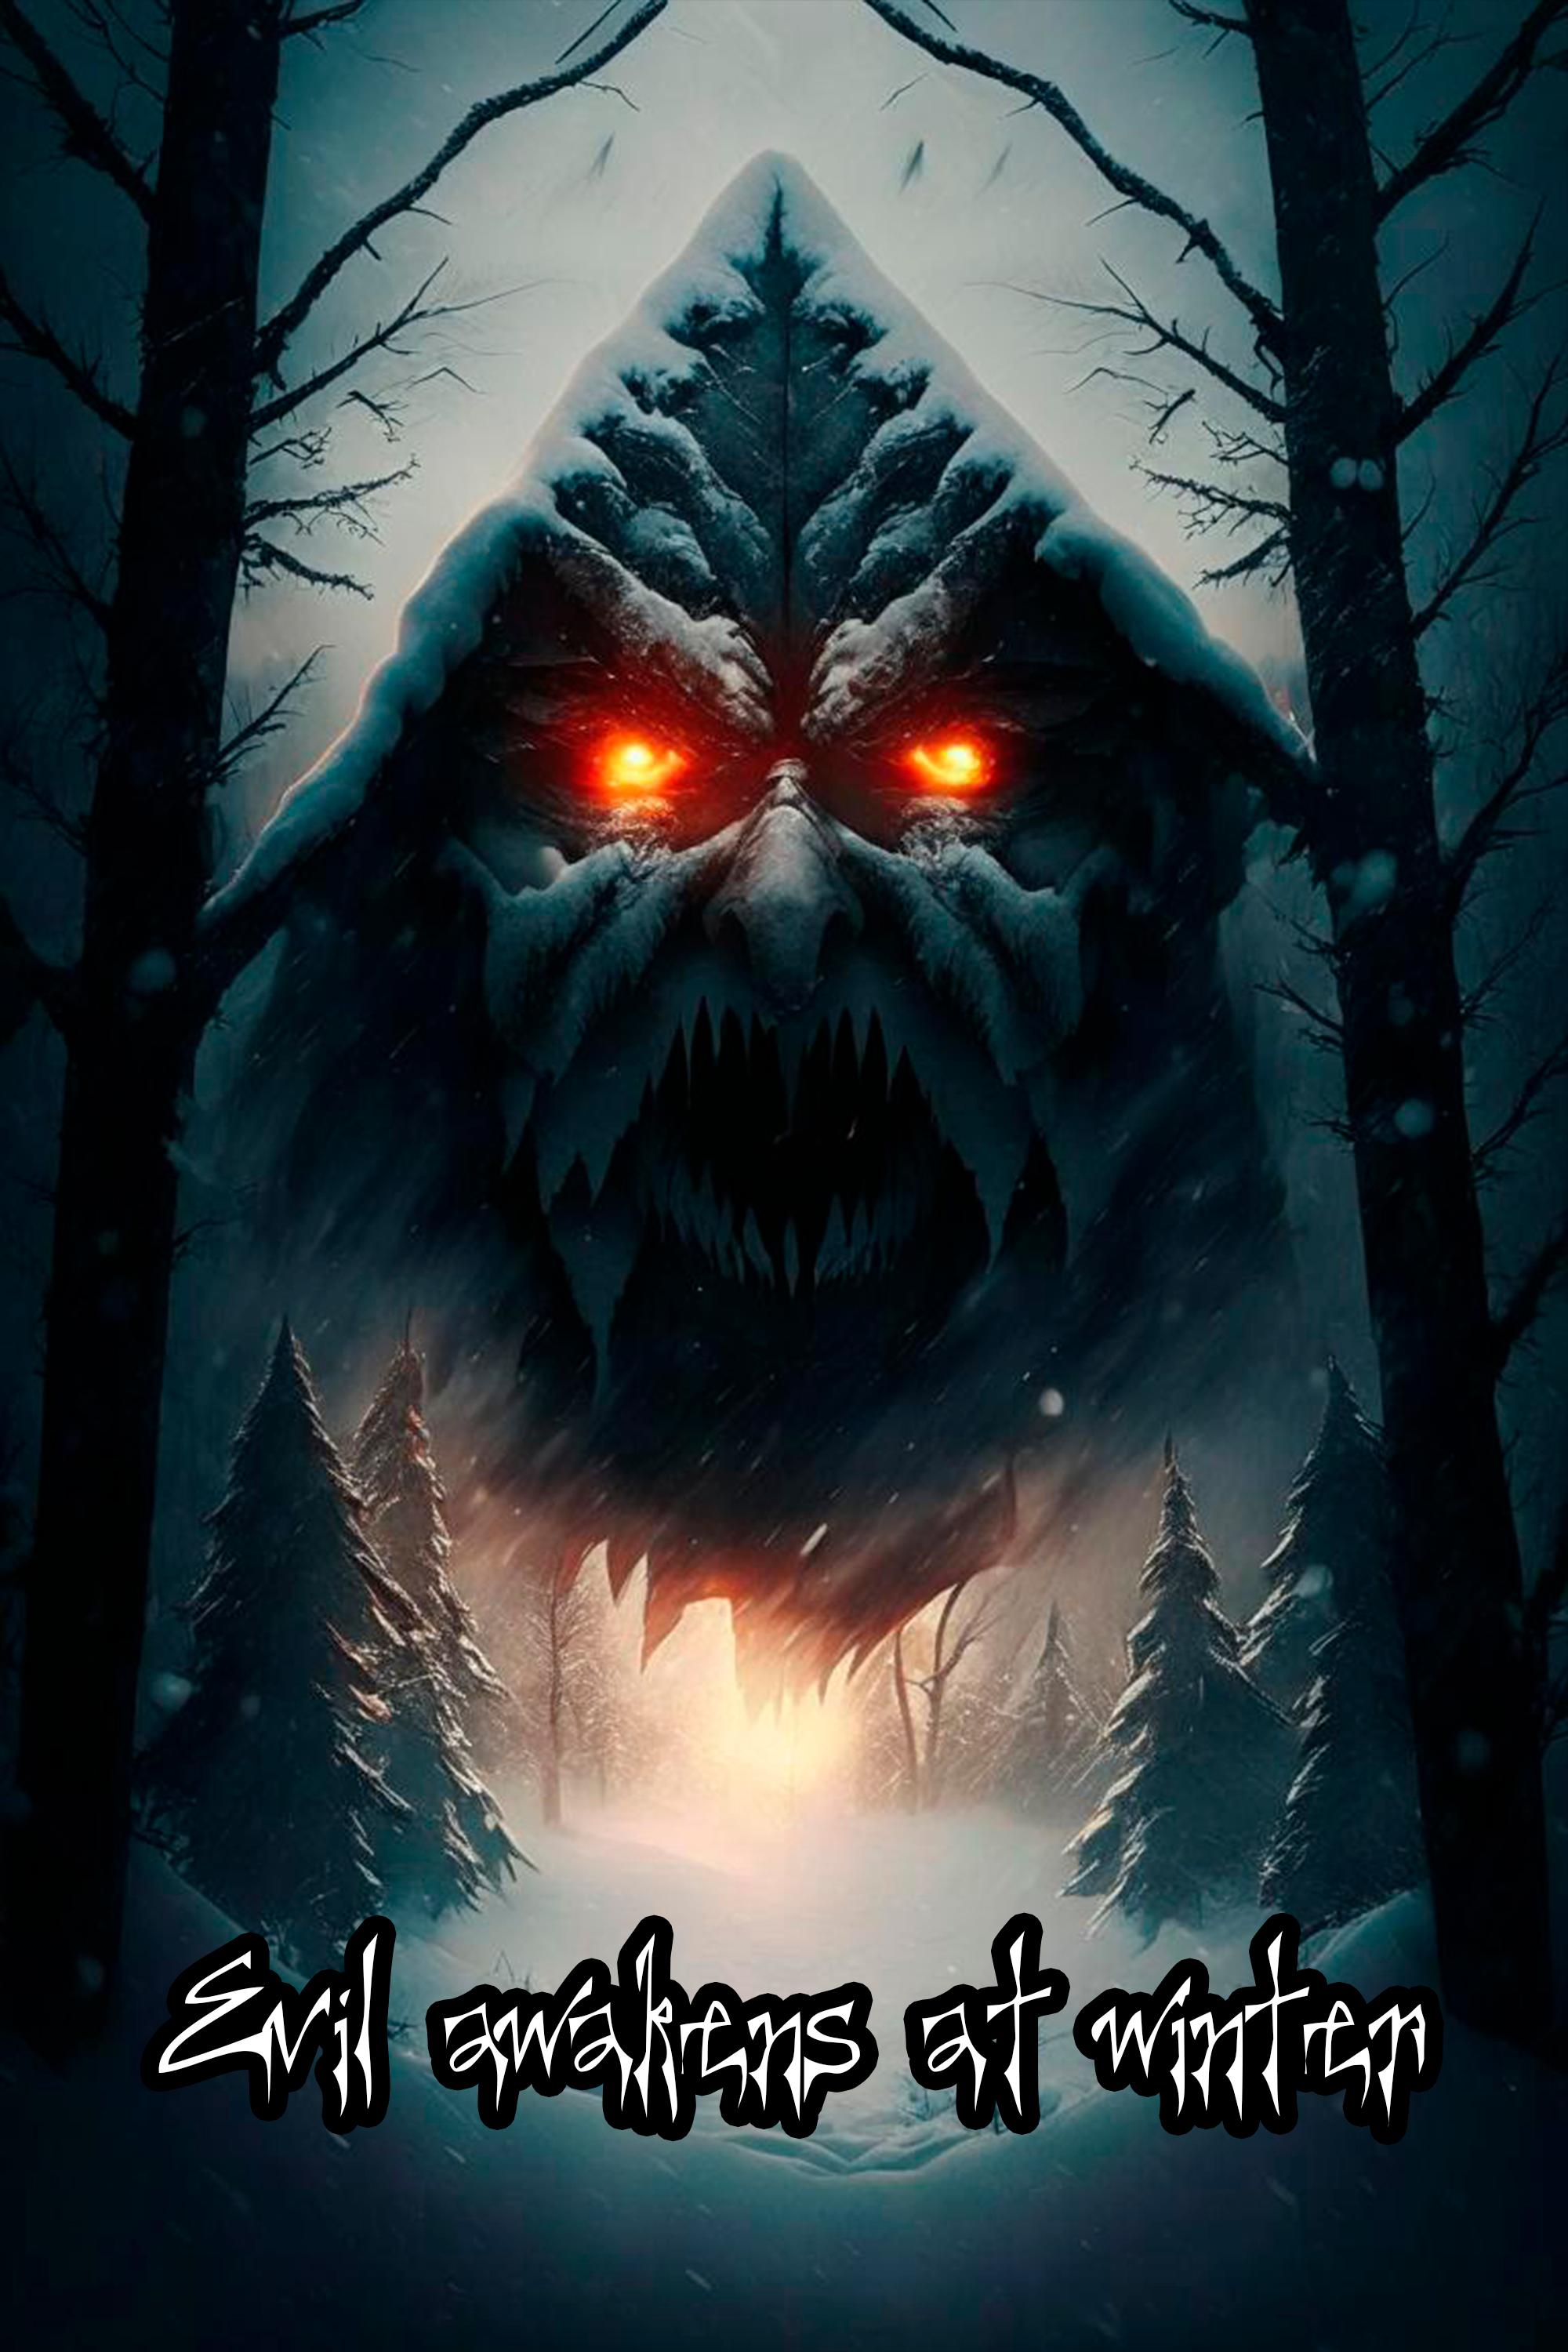 Evil awakens at winter